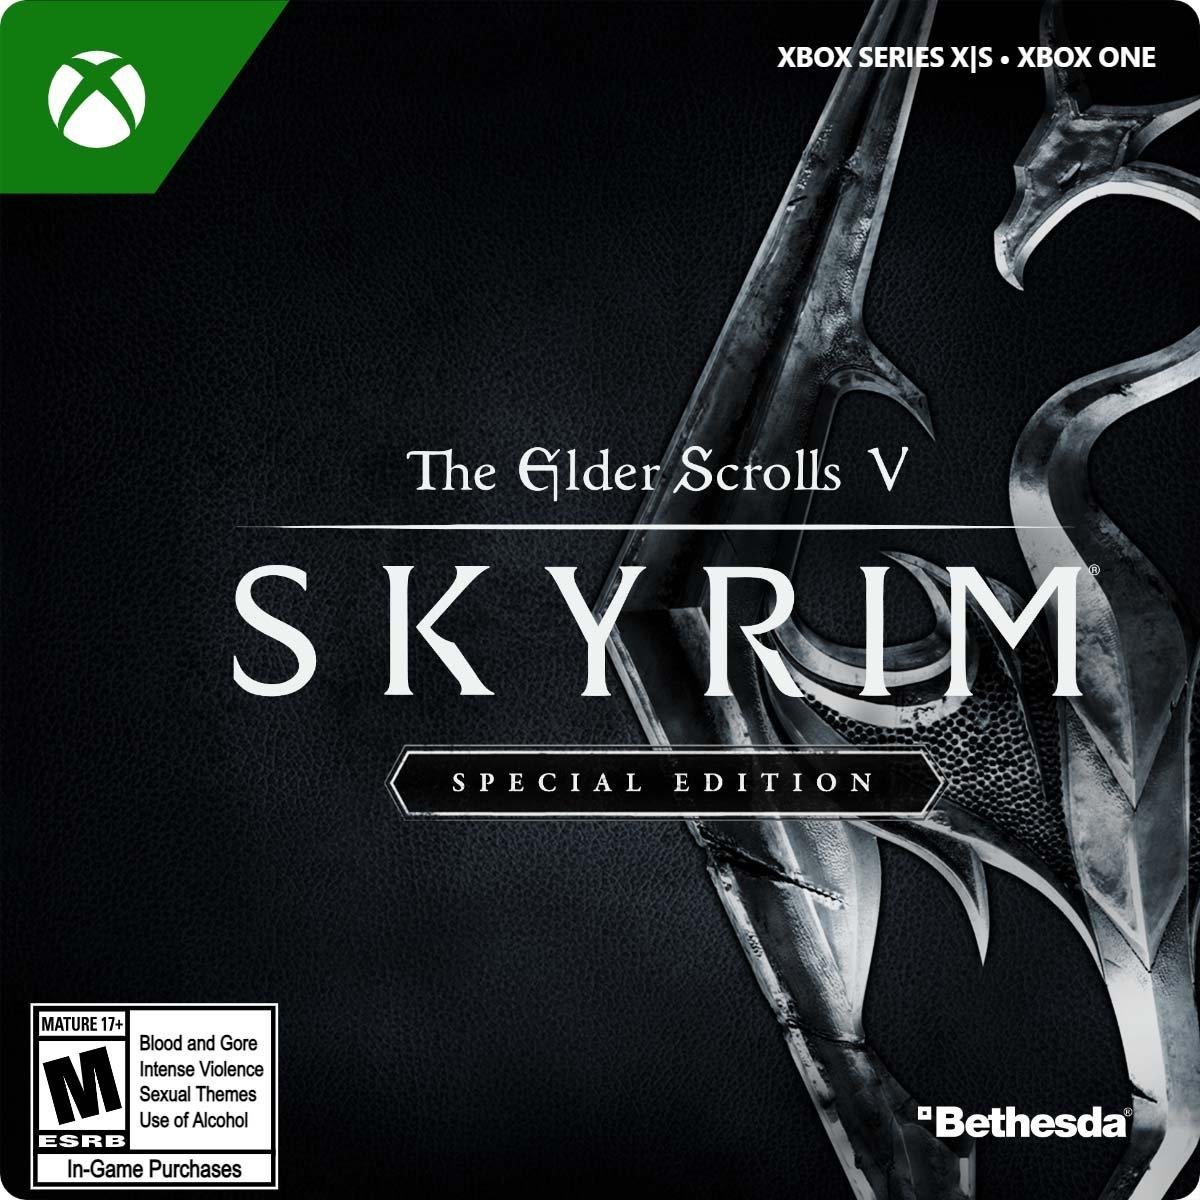 Fremme specielt Eller senere The Elder Scrolls V: Skyrim Special Edition - Xbox One | Xbox One | GameStop